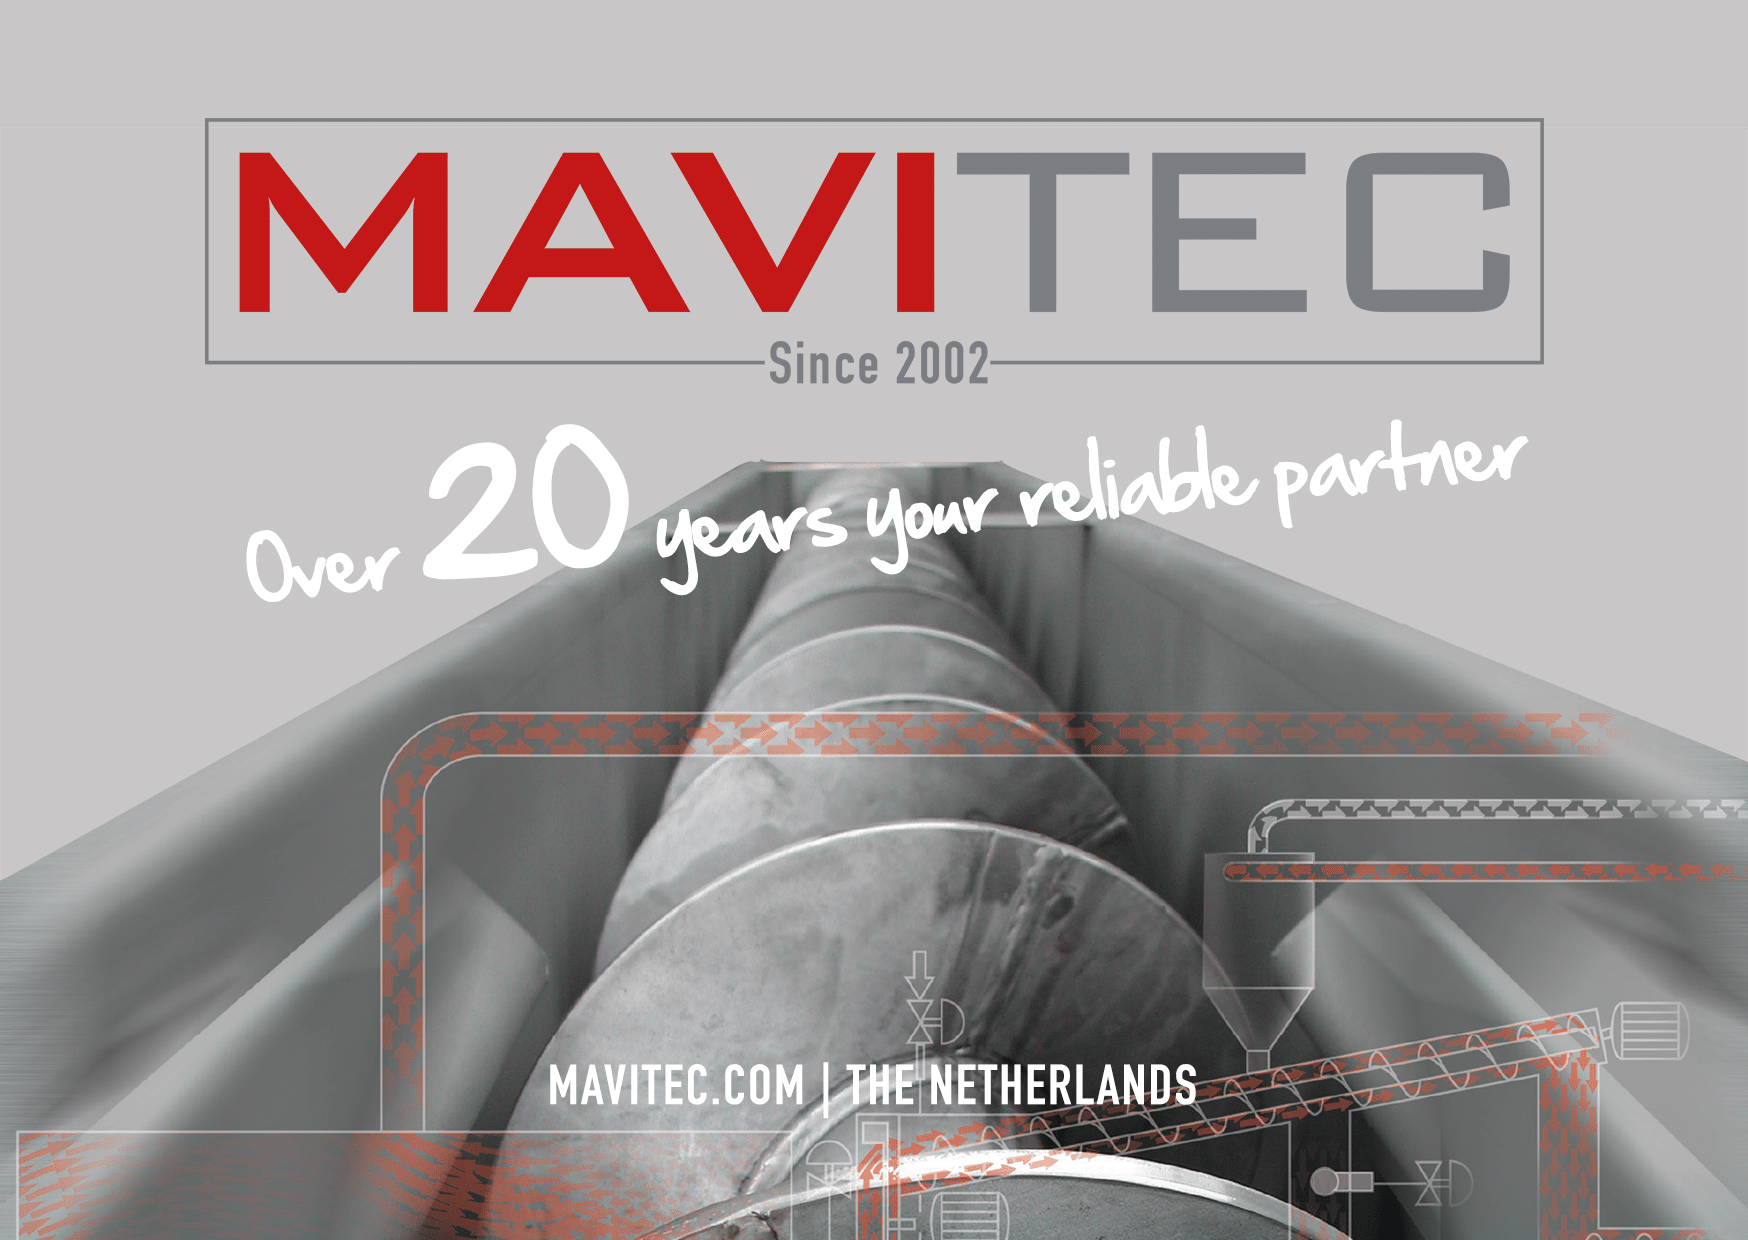 Corporate schroef - MAVITEC 20 years front